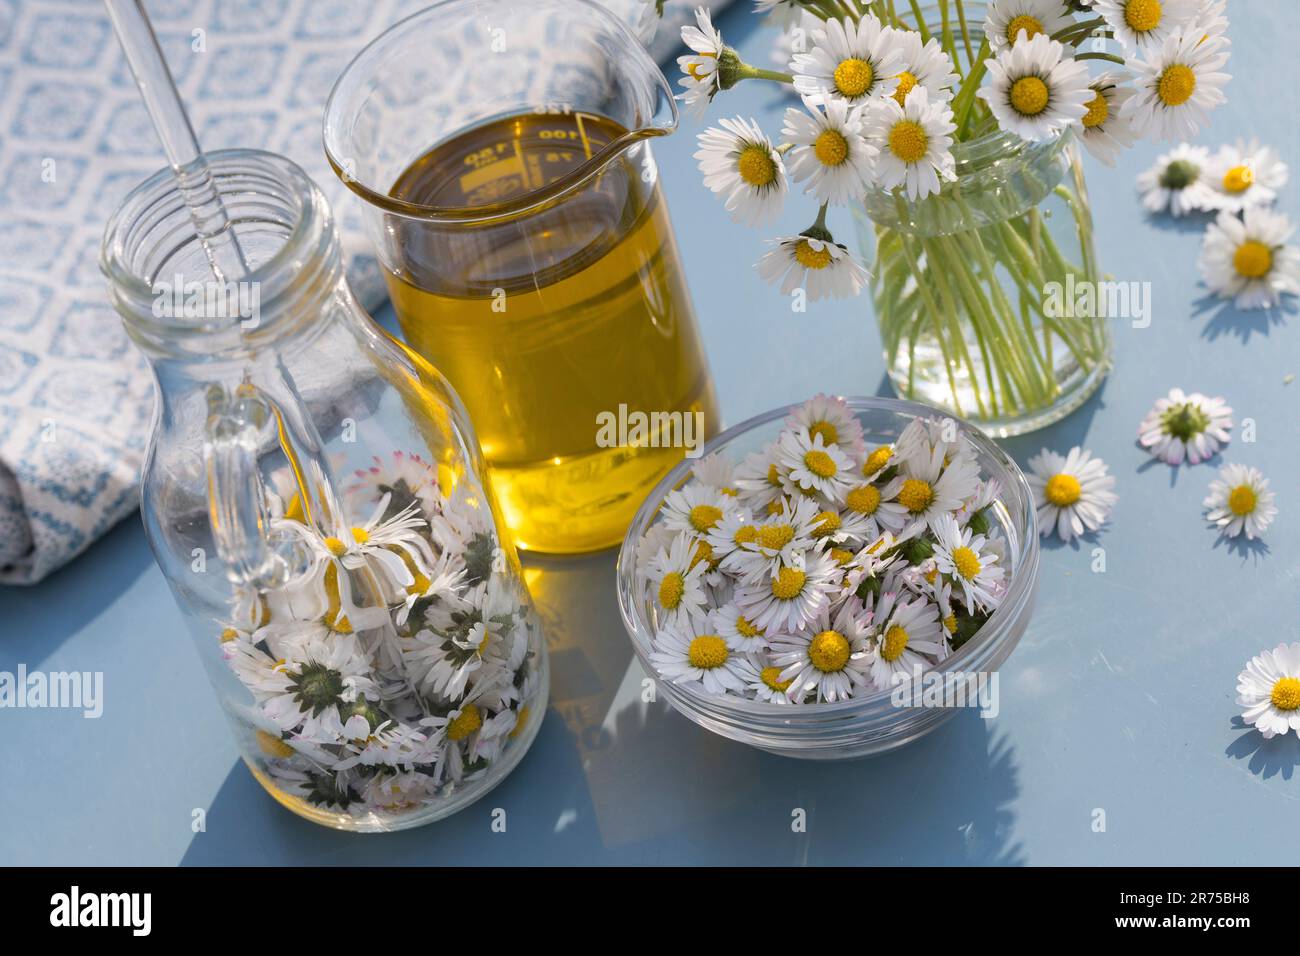 common daisy, lawn daisy, English daisy (Bellis perennis), making of lawn daisy oil, Germany Stock Photo